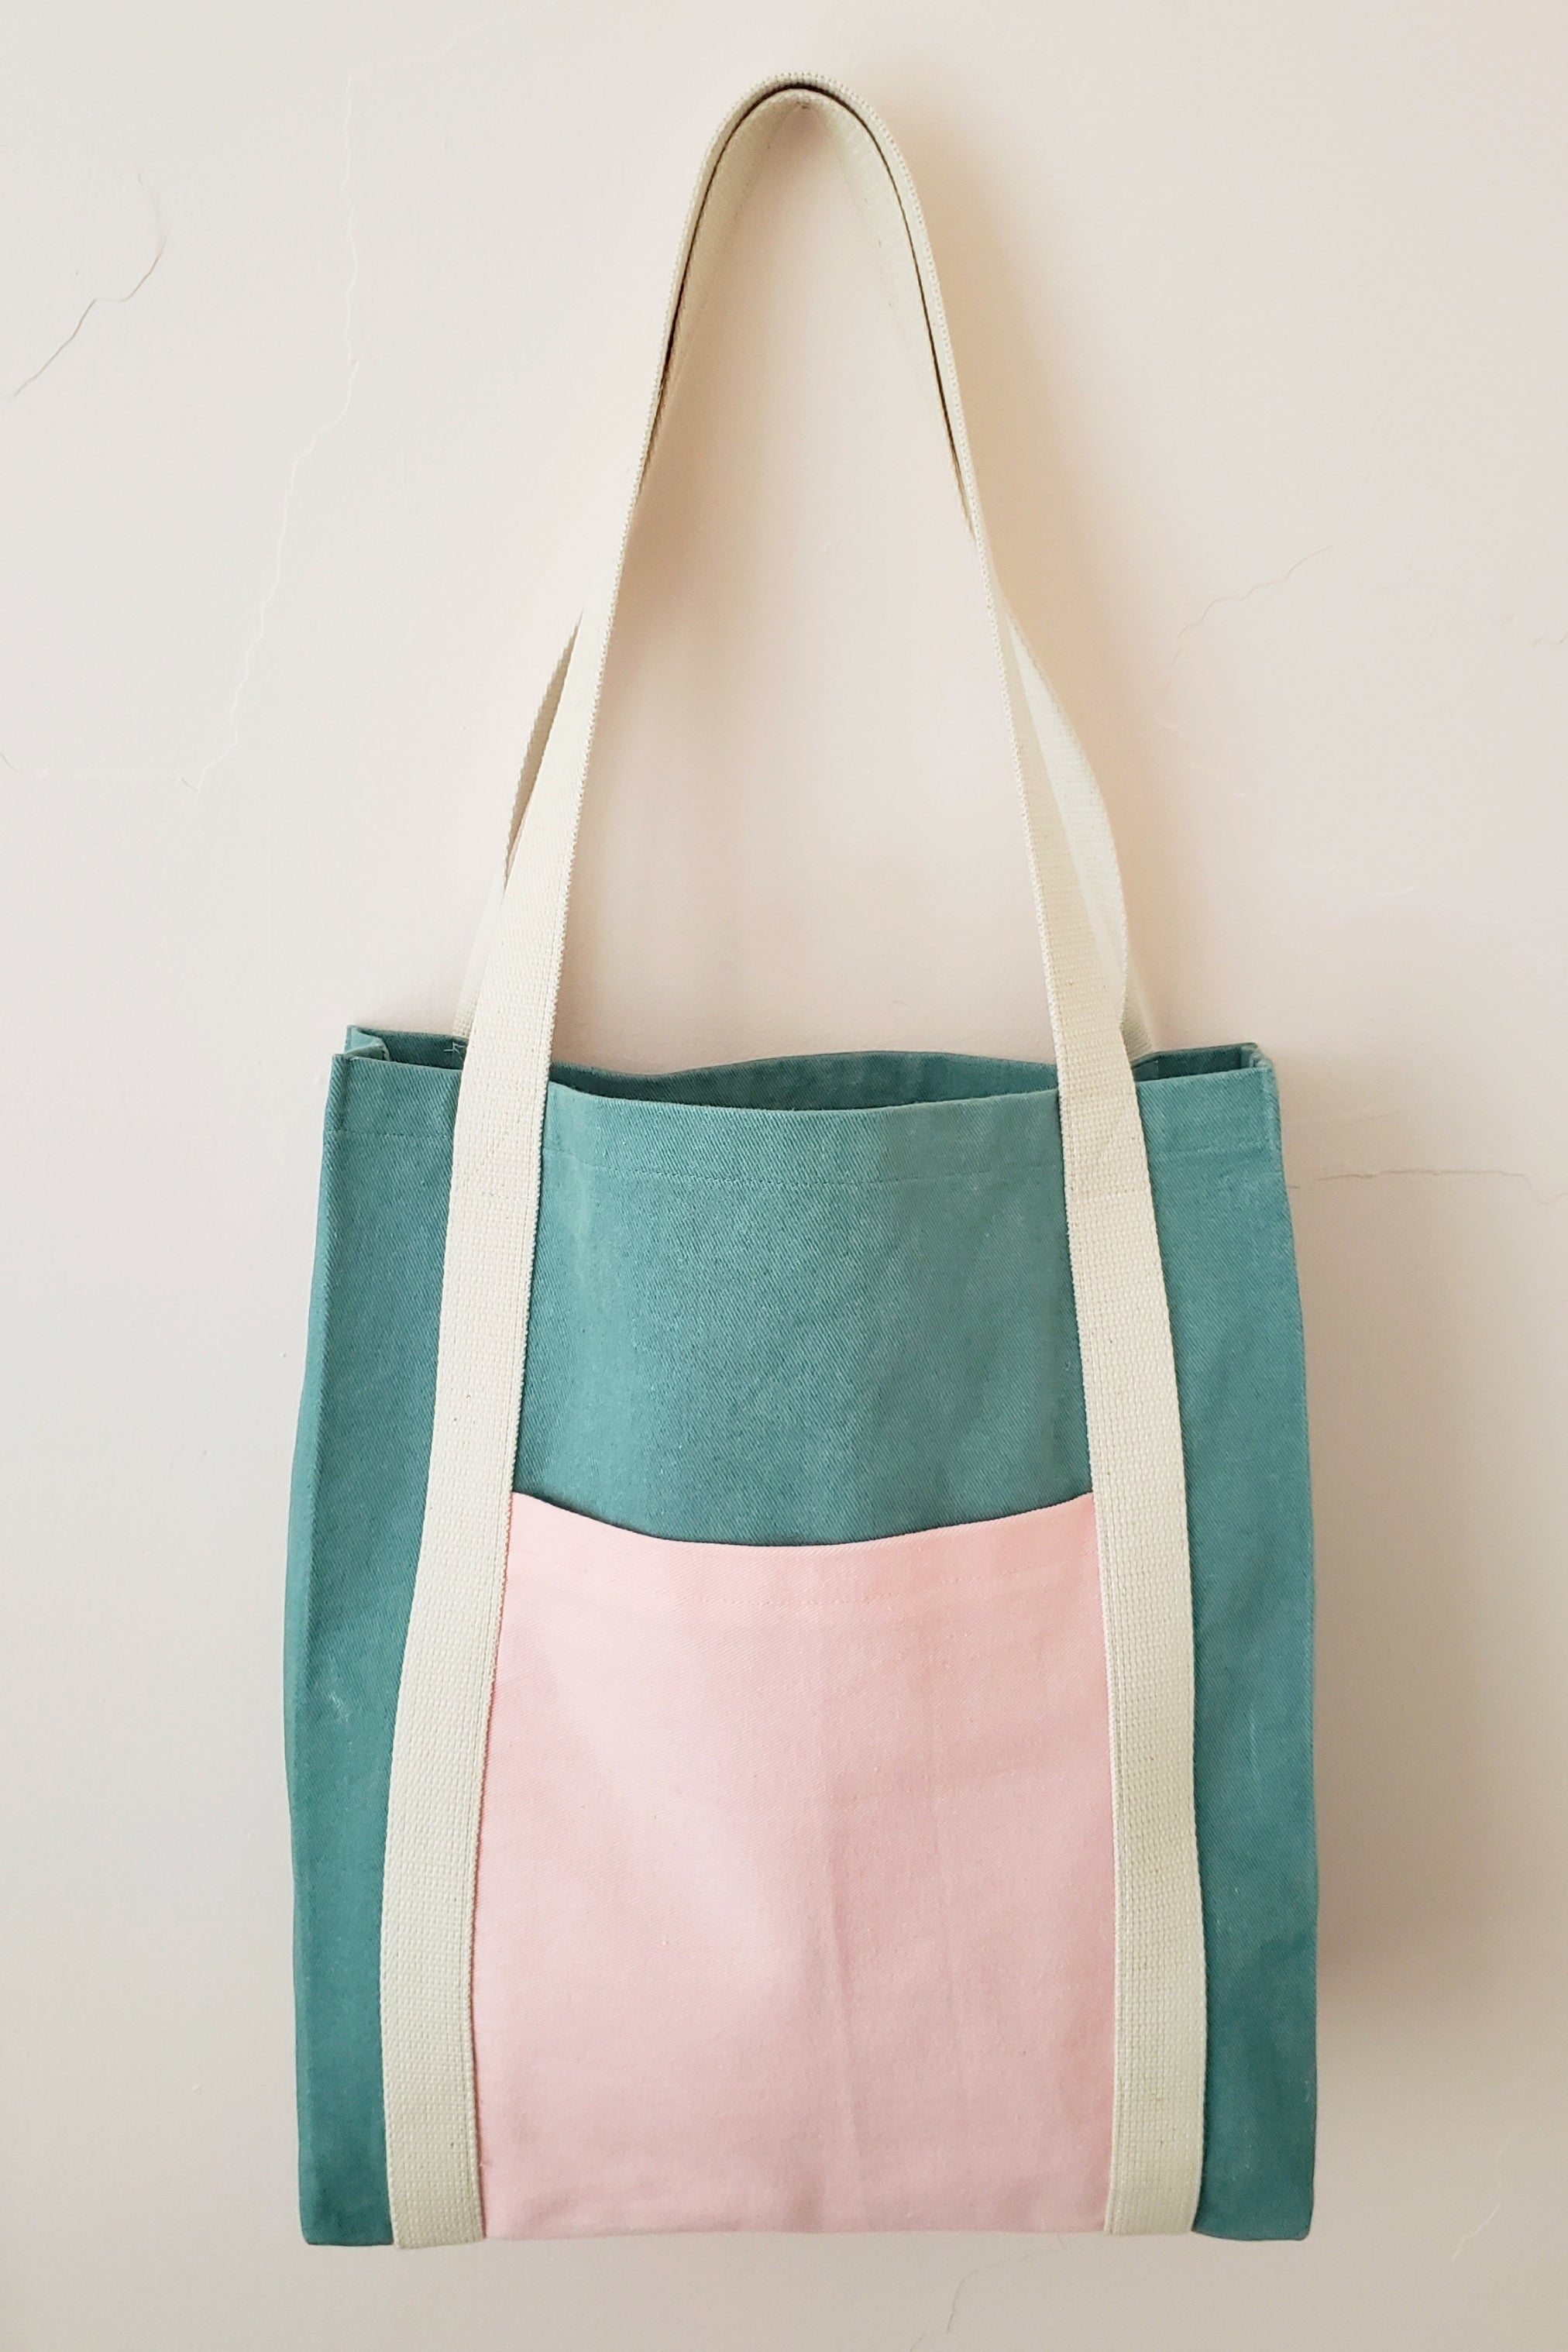 Fabric Hobo Bag Free Sewing Pattern